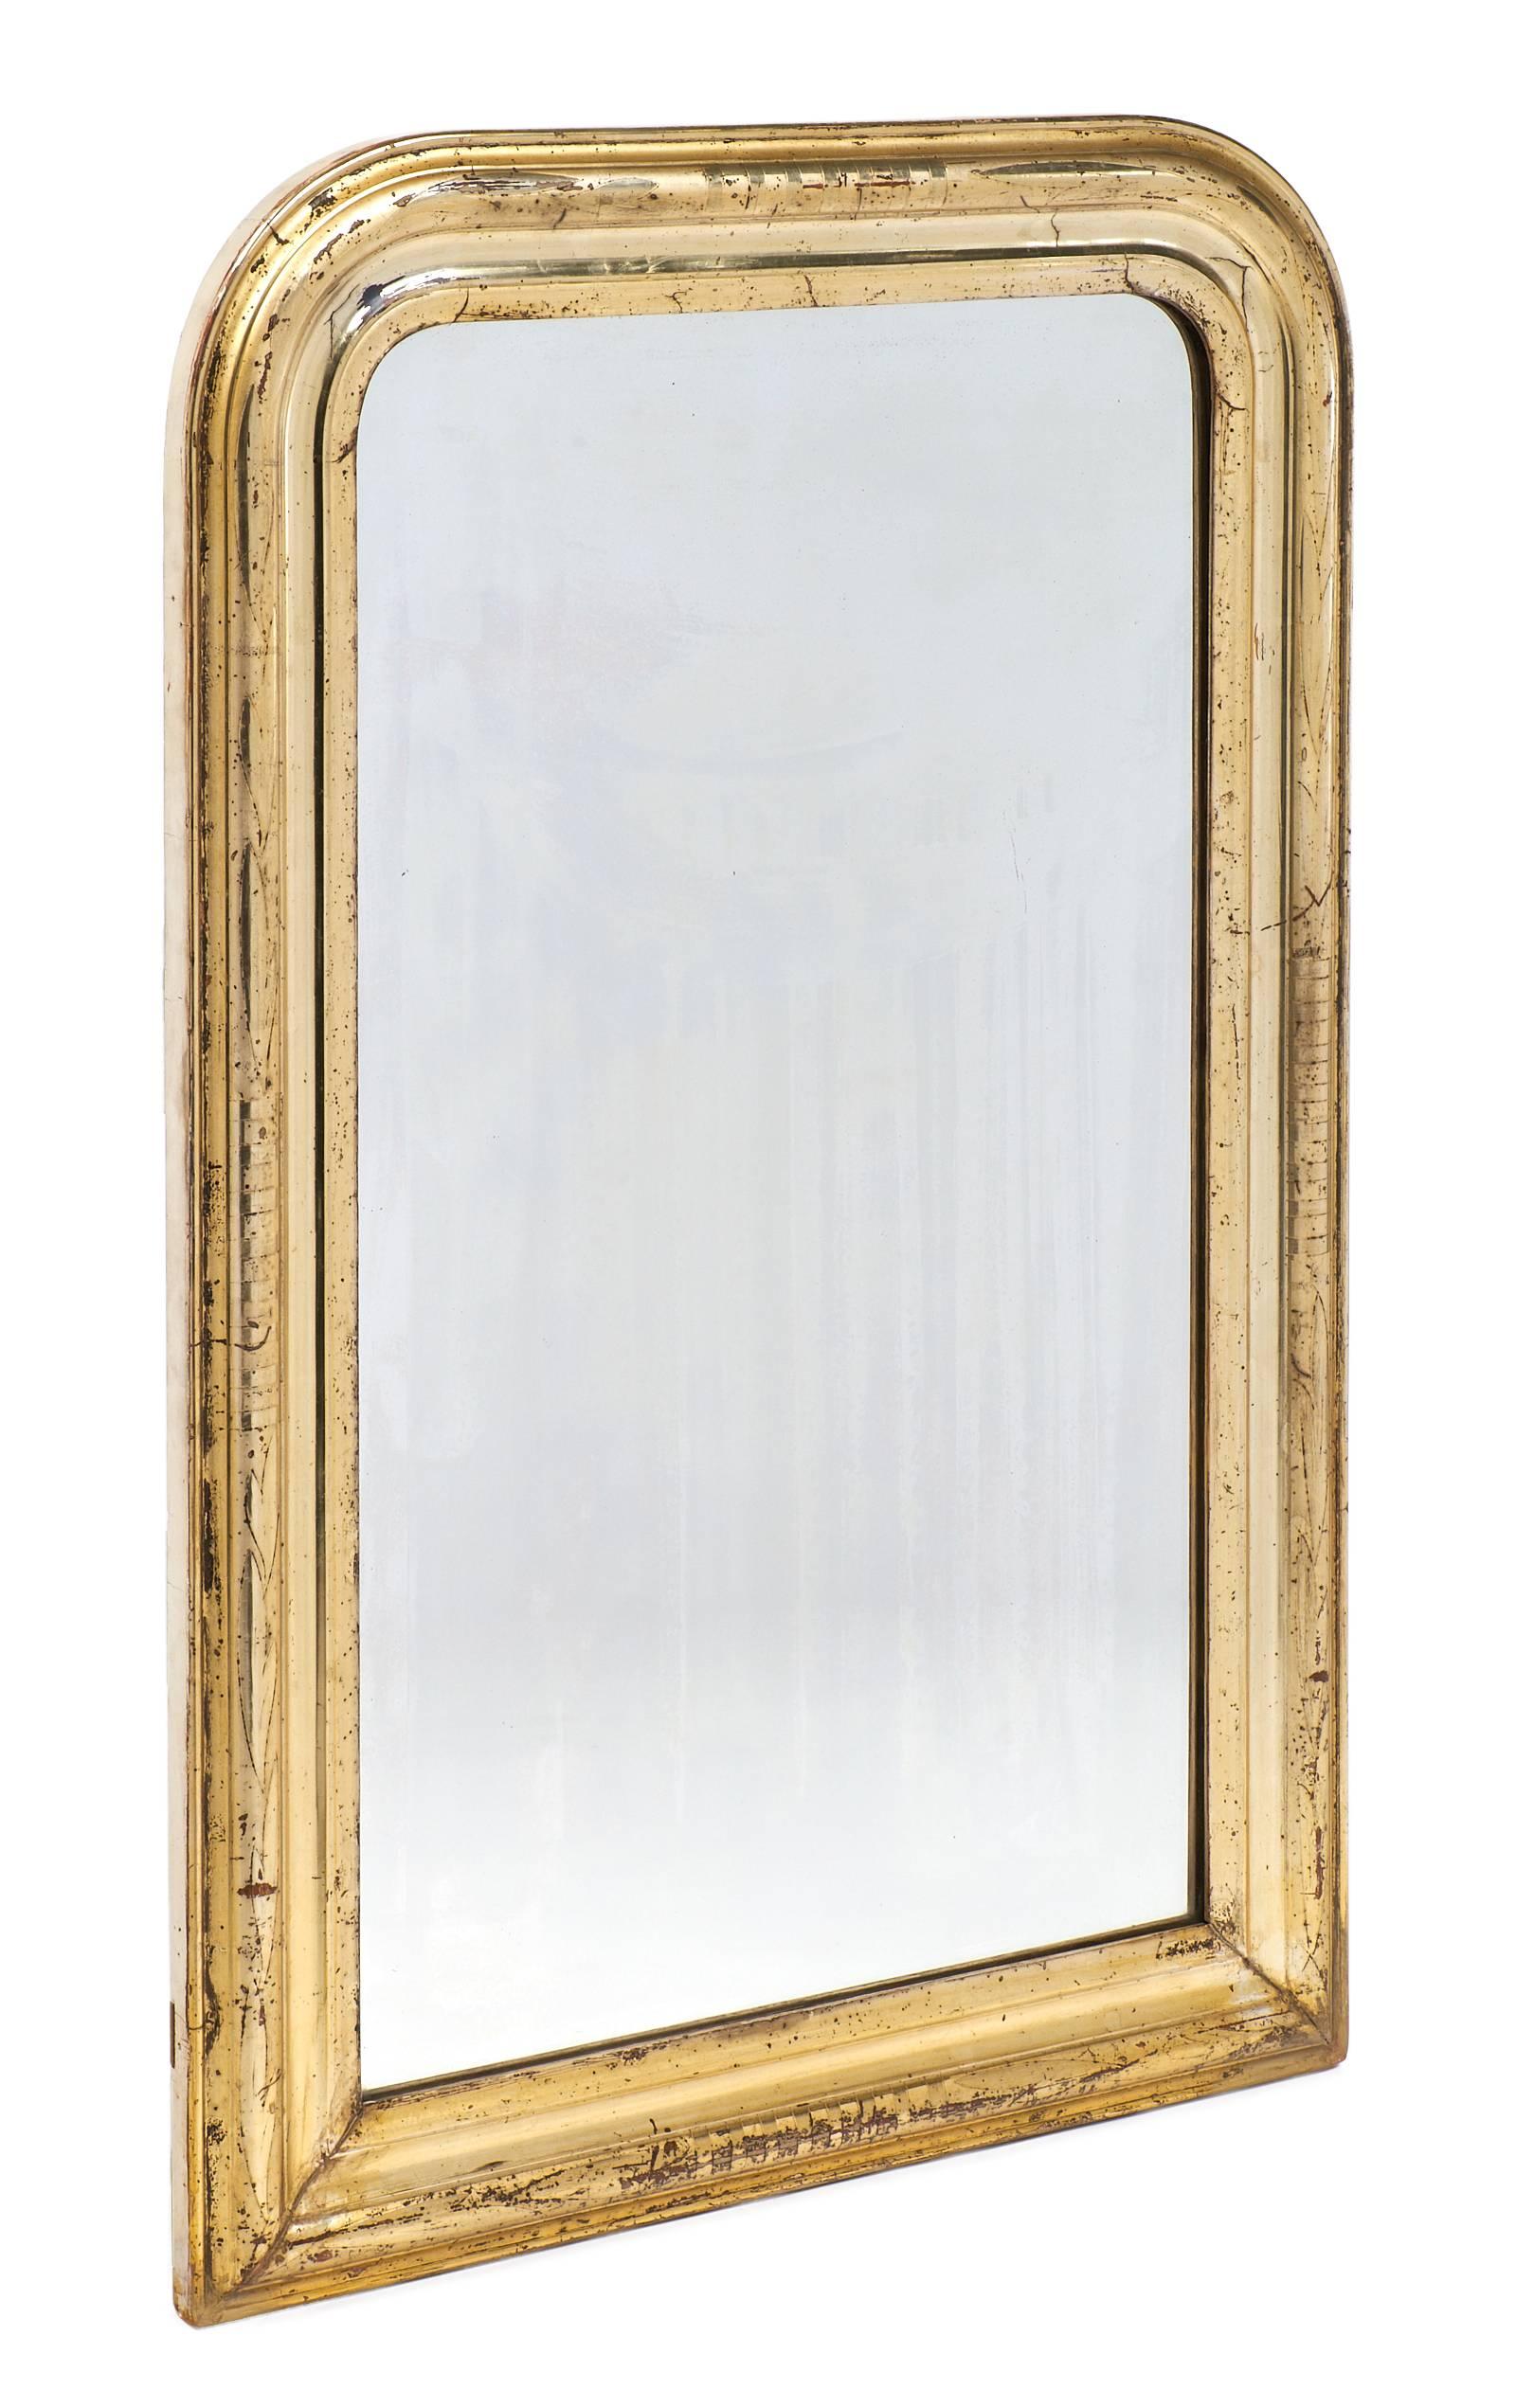 French Louis Philippe Period Gold Leaf Mirror, circa 1845